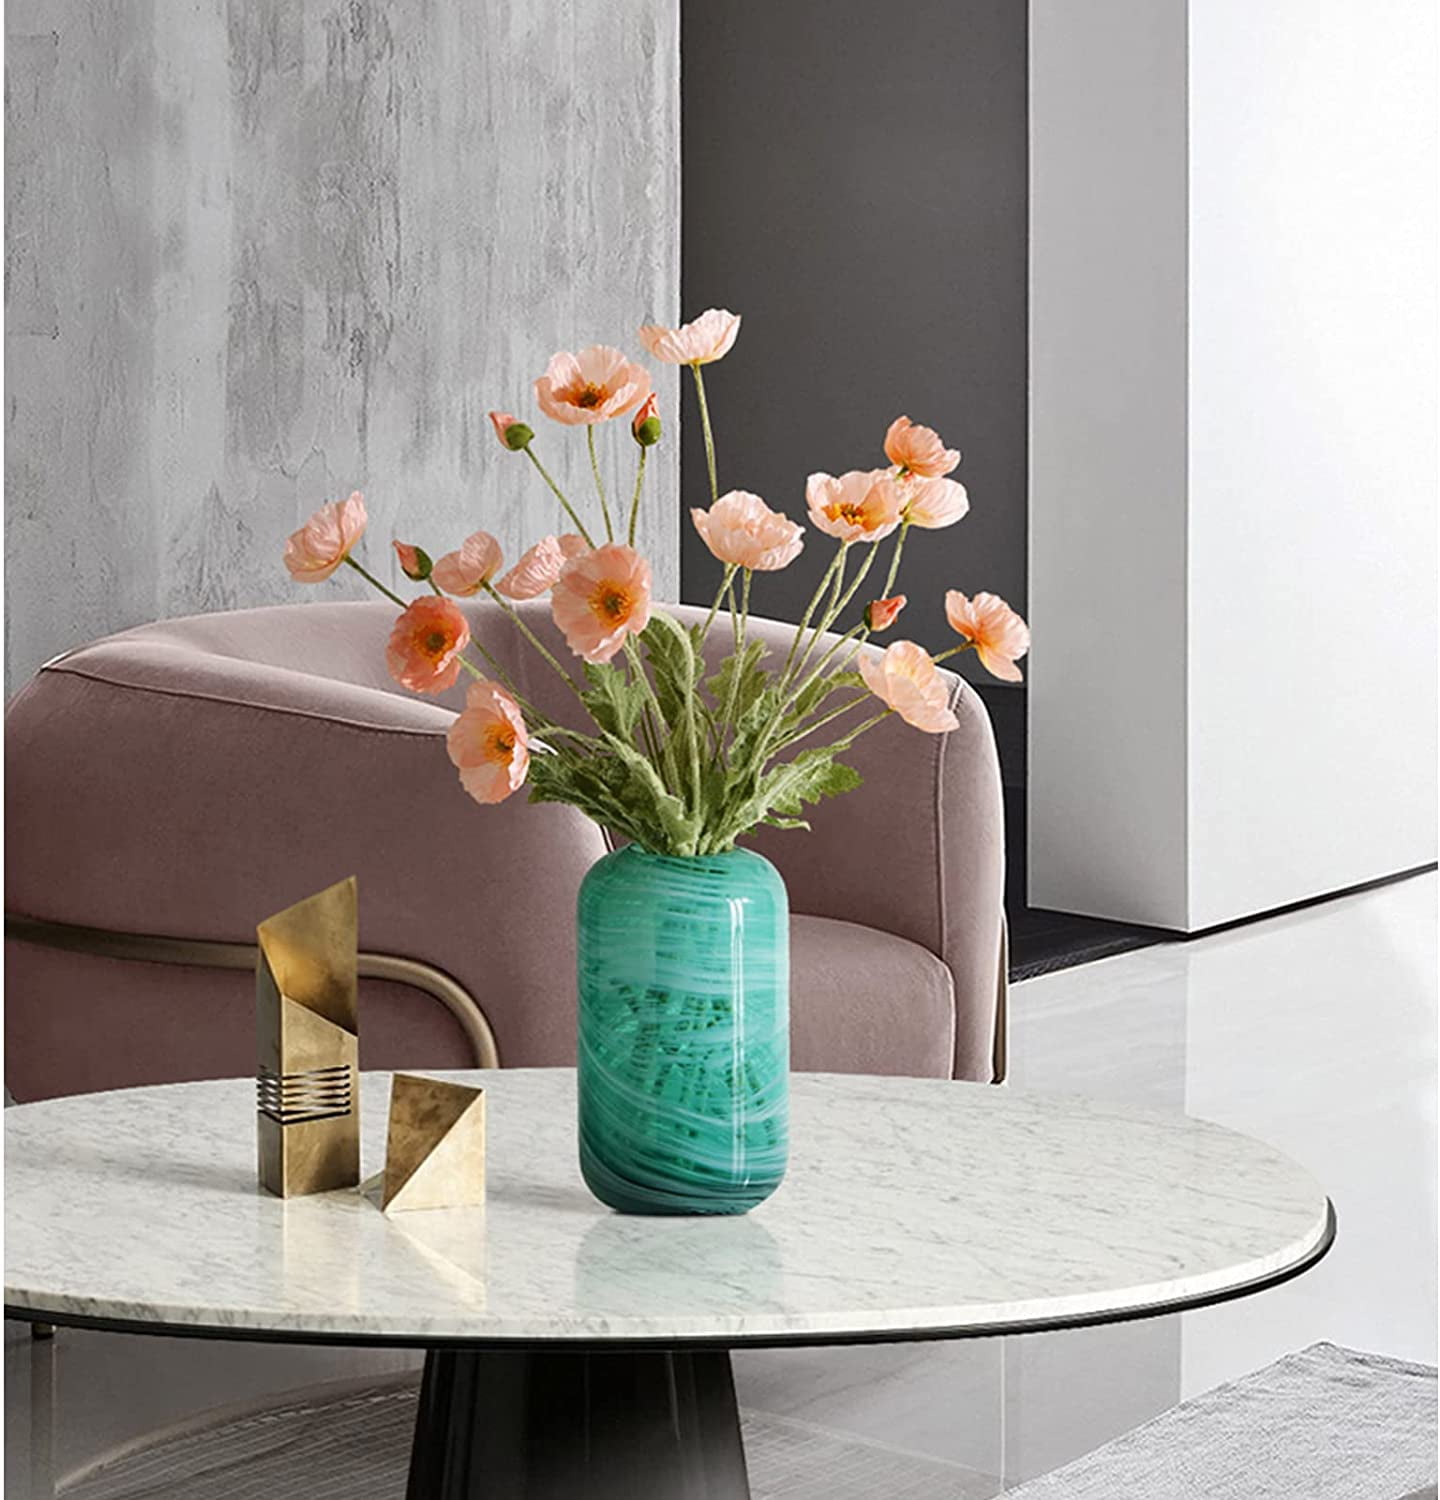 Office Floral Arrangements and Decor for Home Details about   Ceramic Vase 